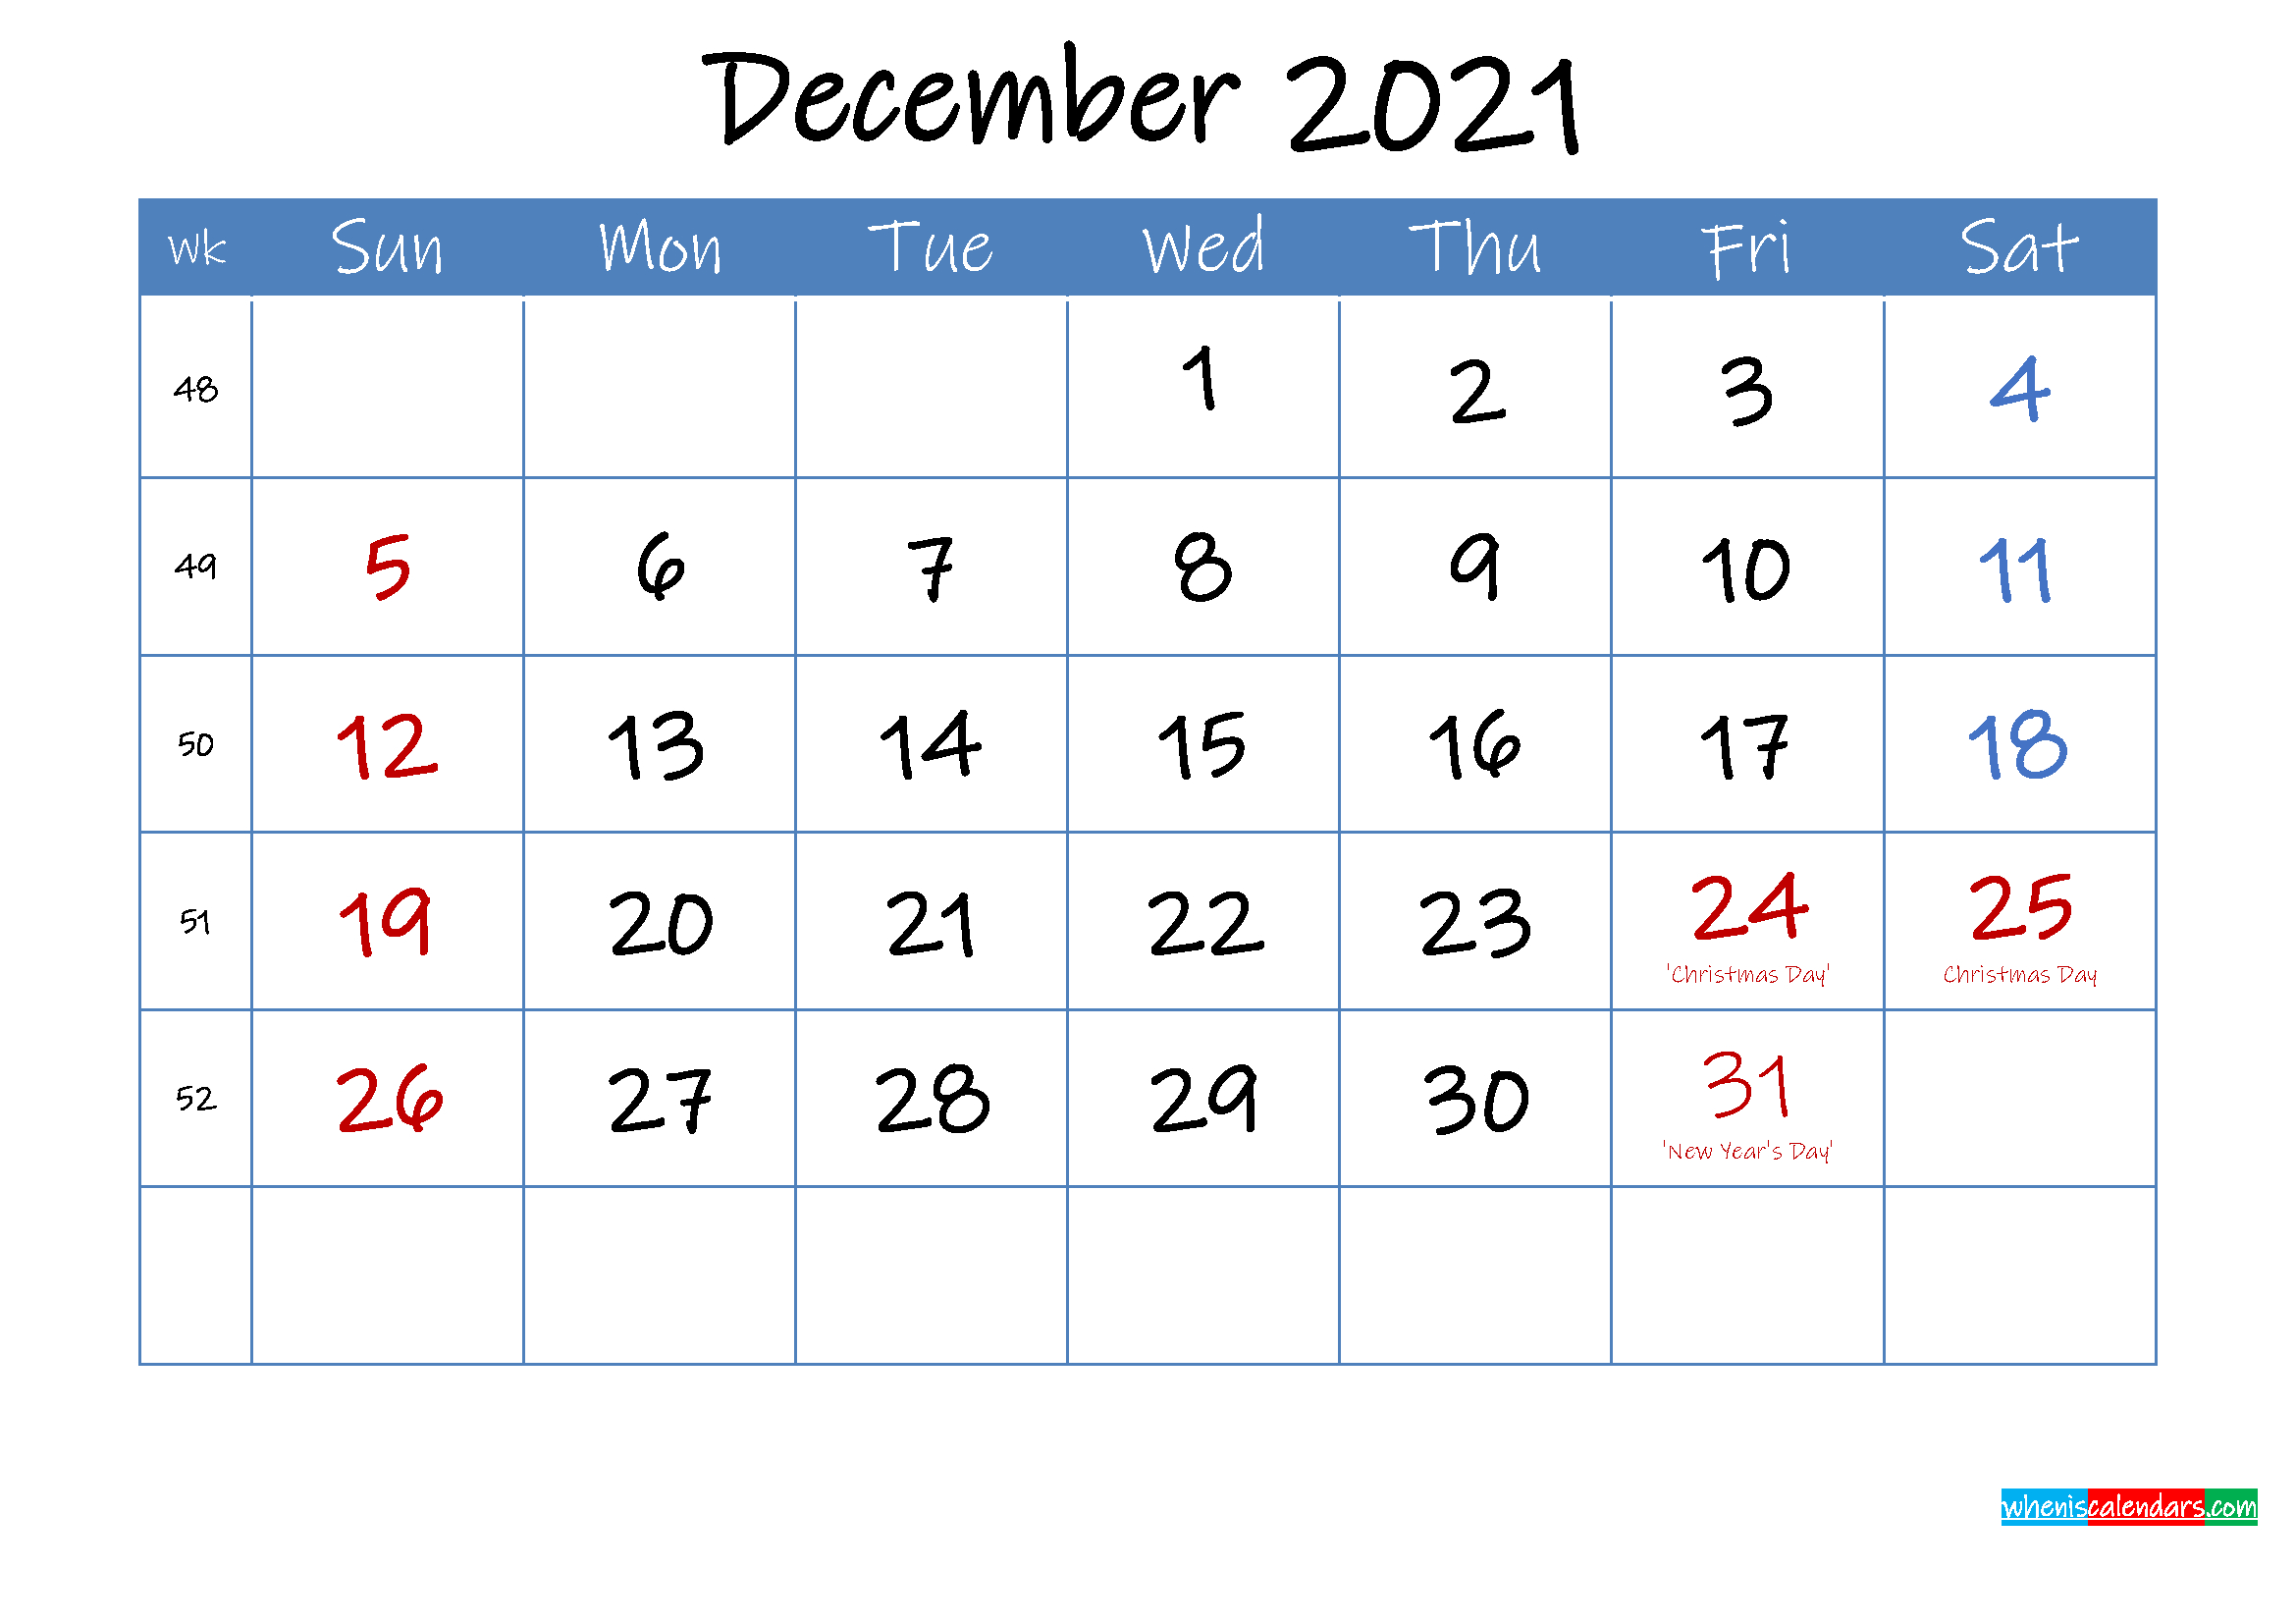 Printable December 2021 Calendar Word - Template Ink21M24 Calendar For December 2021